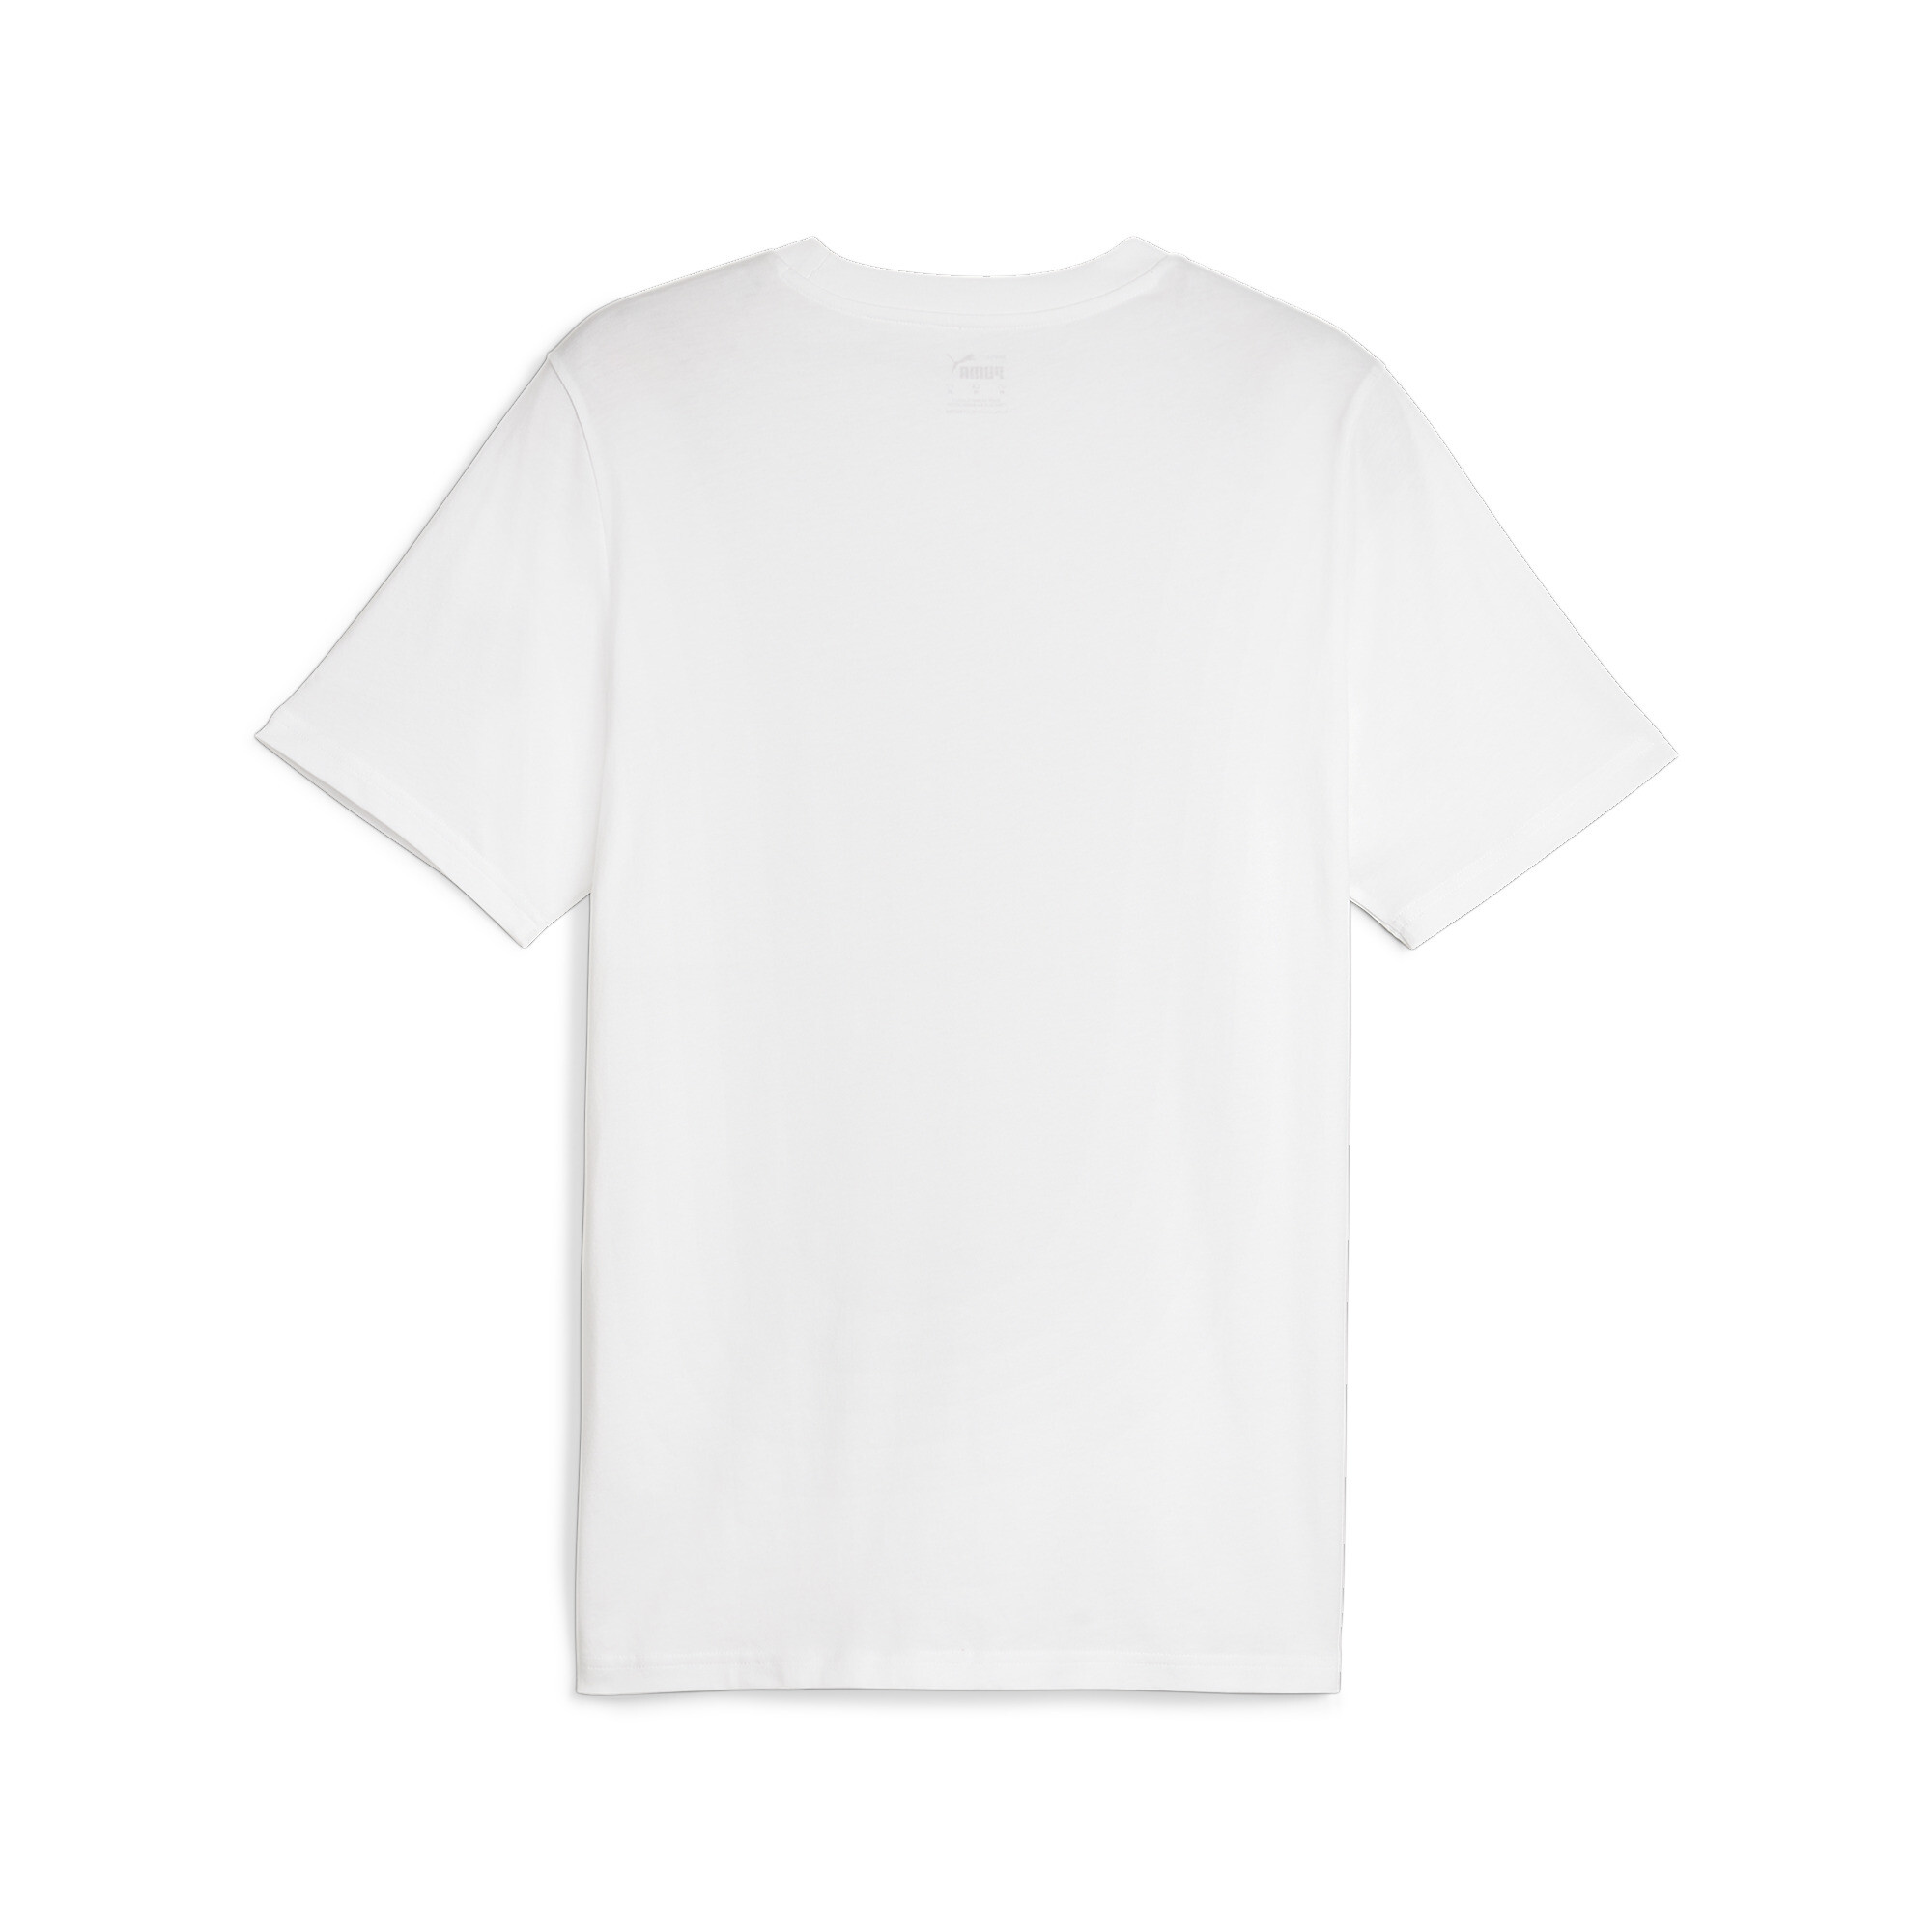 Men's PUMA GRAPHICS Foil T-Shirt In 20 - White, Size Large